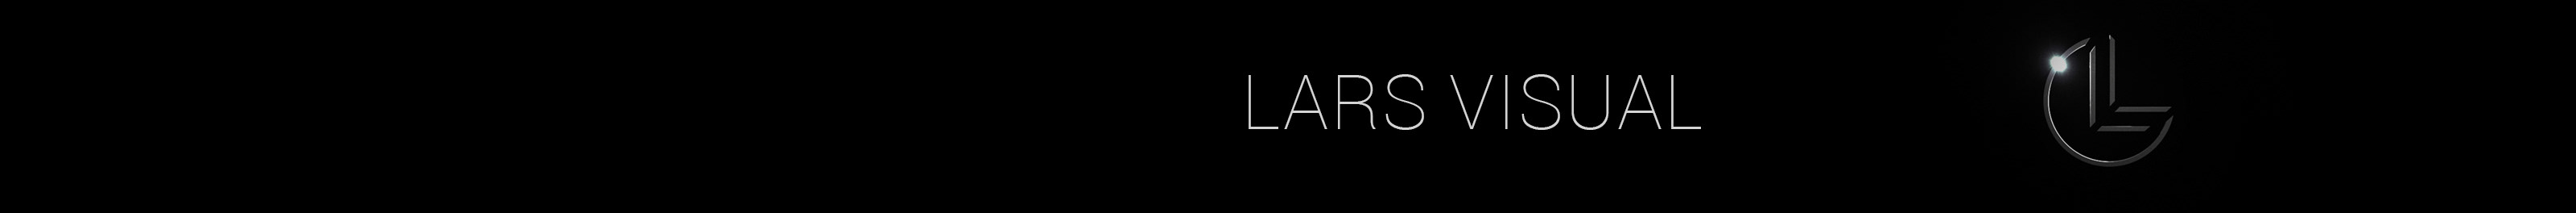 Lars Lovas's profile banner